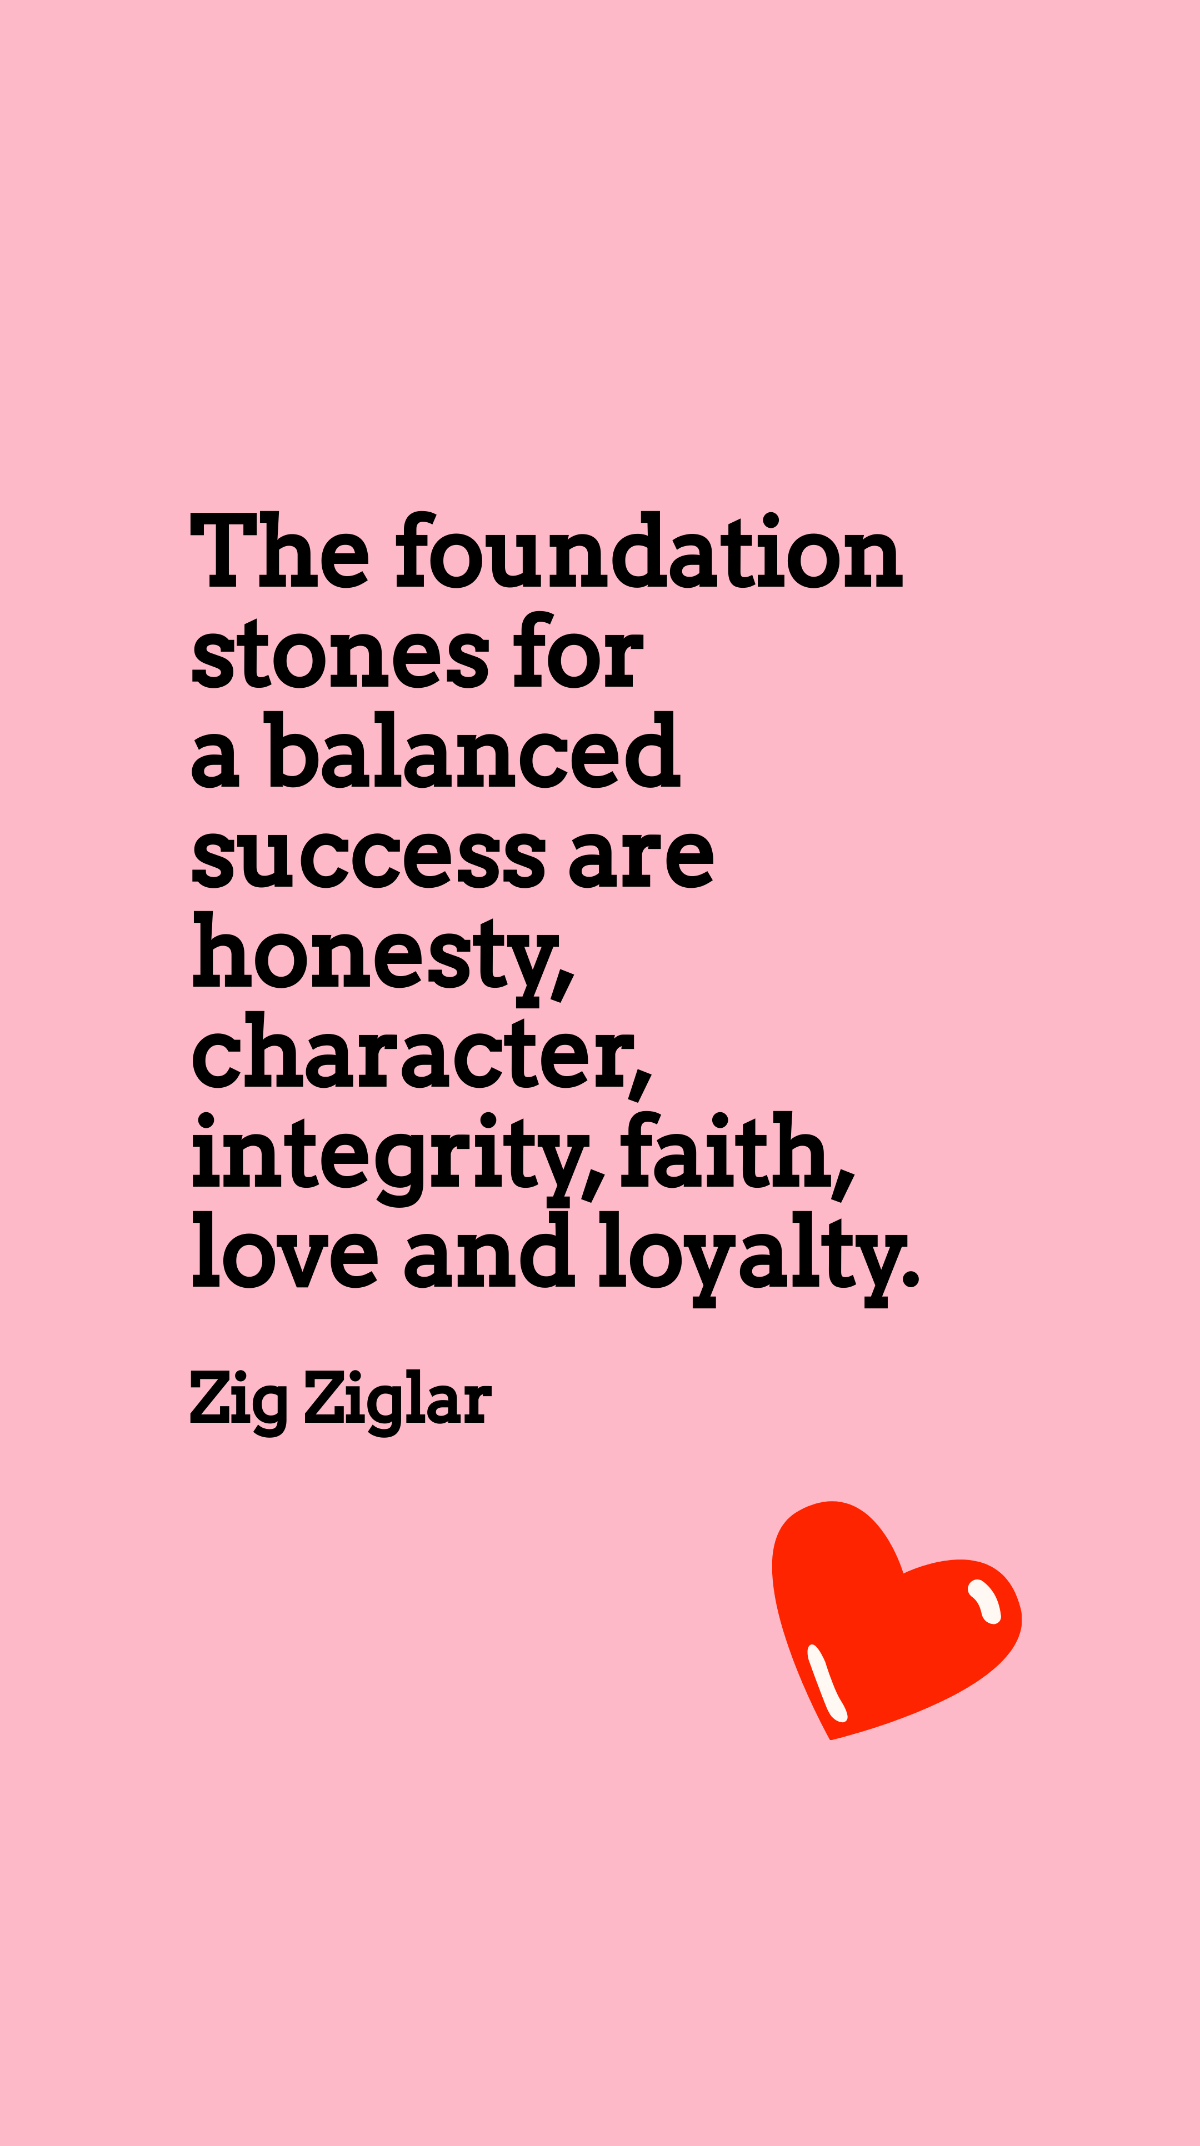 Zig Ziglar - The foundation stones for a balanced success are honesty, character, integrity, faith, love and loyalty. Template